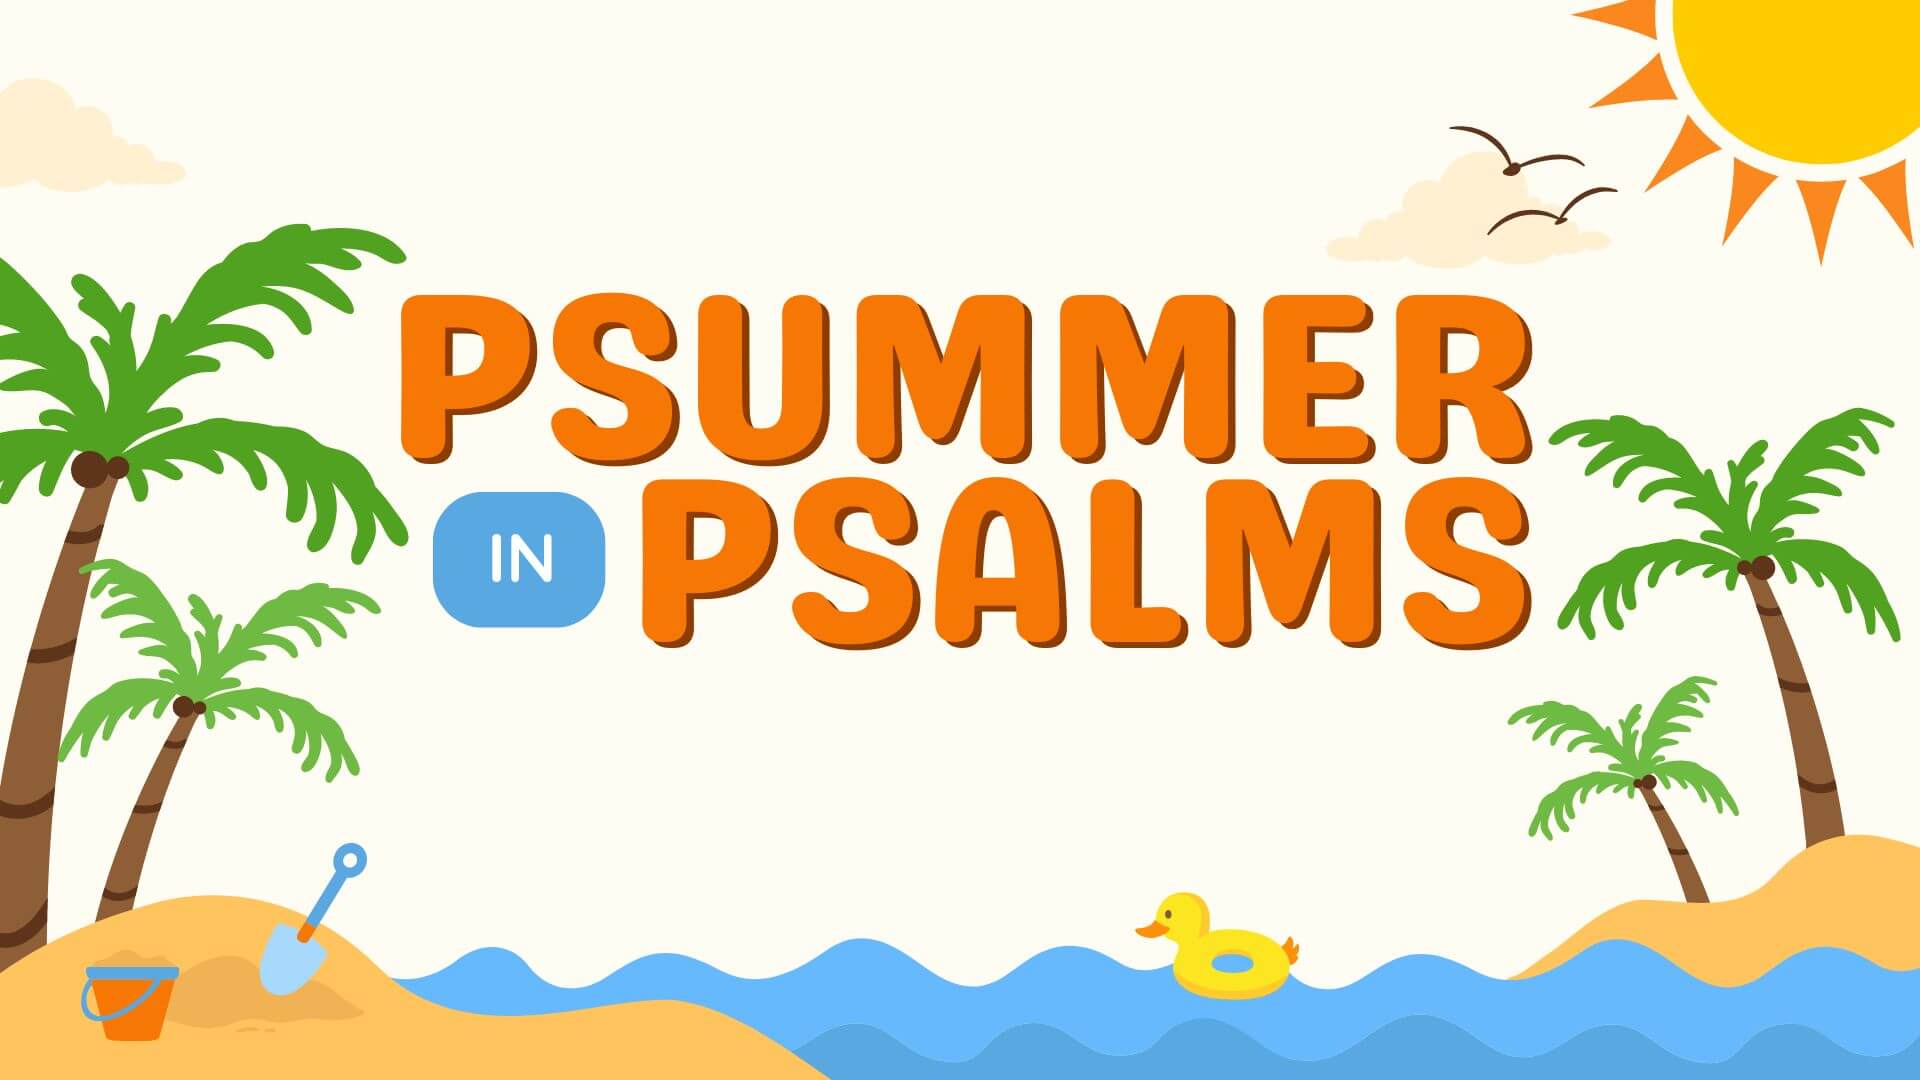 Psummer in Psalms: Lessons for Life’s Journey